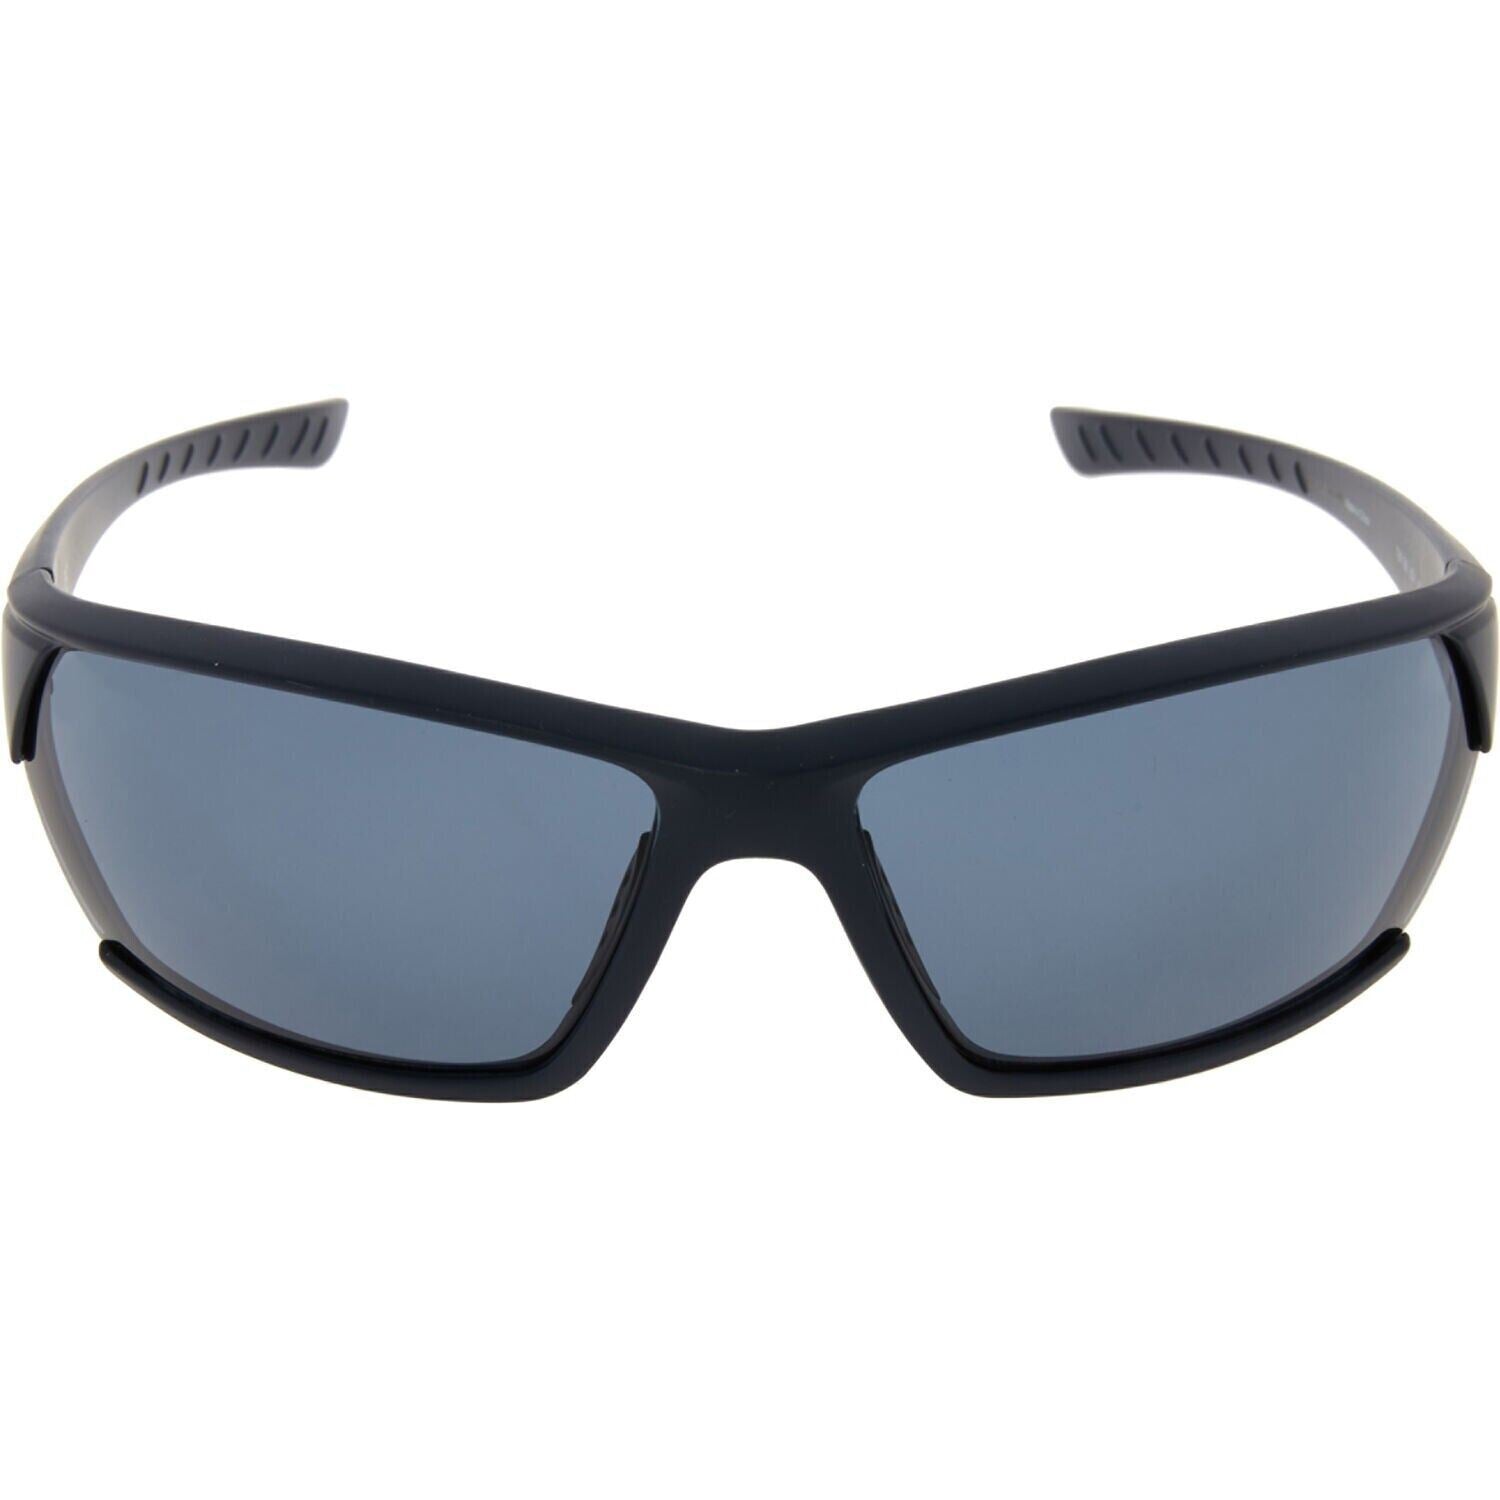 TIMBERLAND Men's Navy Blue Wrap Sunglasses, TB7188